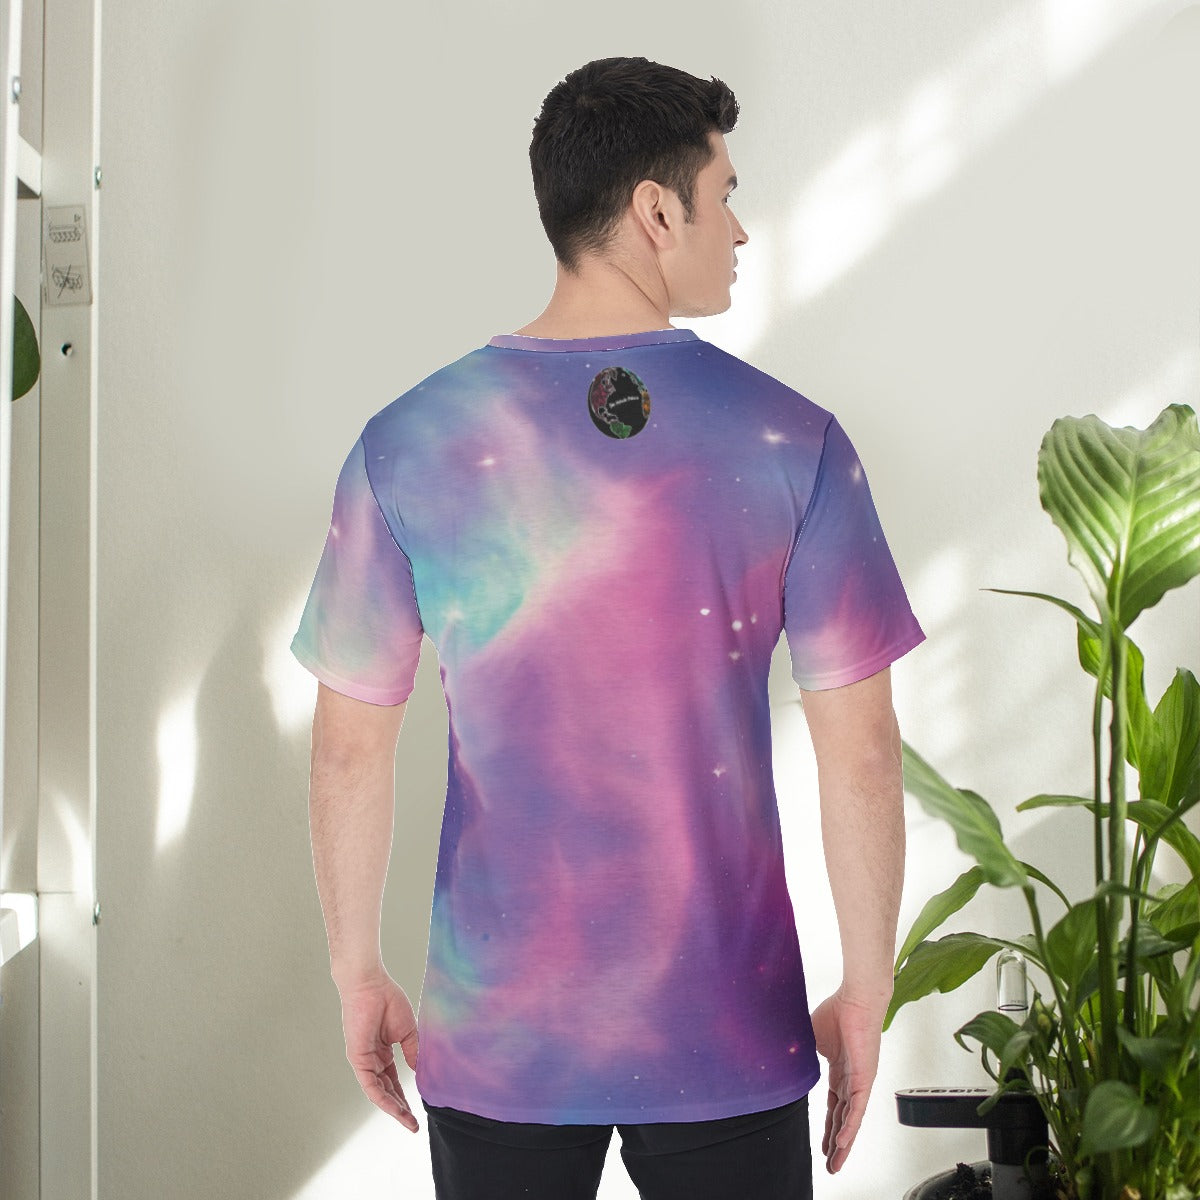 Vibrant Iridescent Cosmic Nebula Fashion Men's V-Neck T-Shirt Tee The Nebula Palace: Spiritually Cosmic Fashion